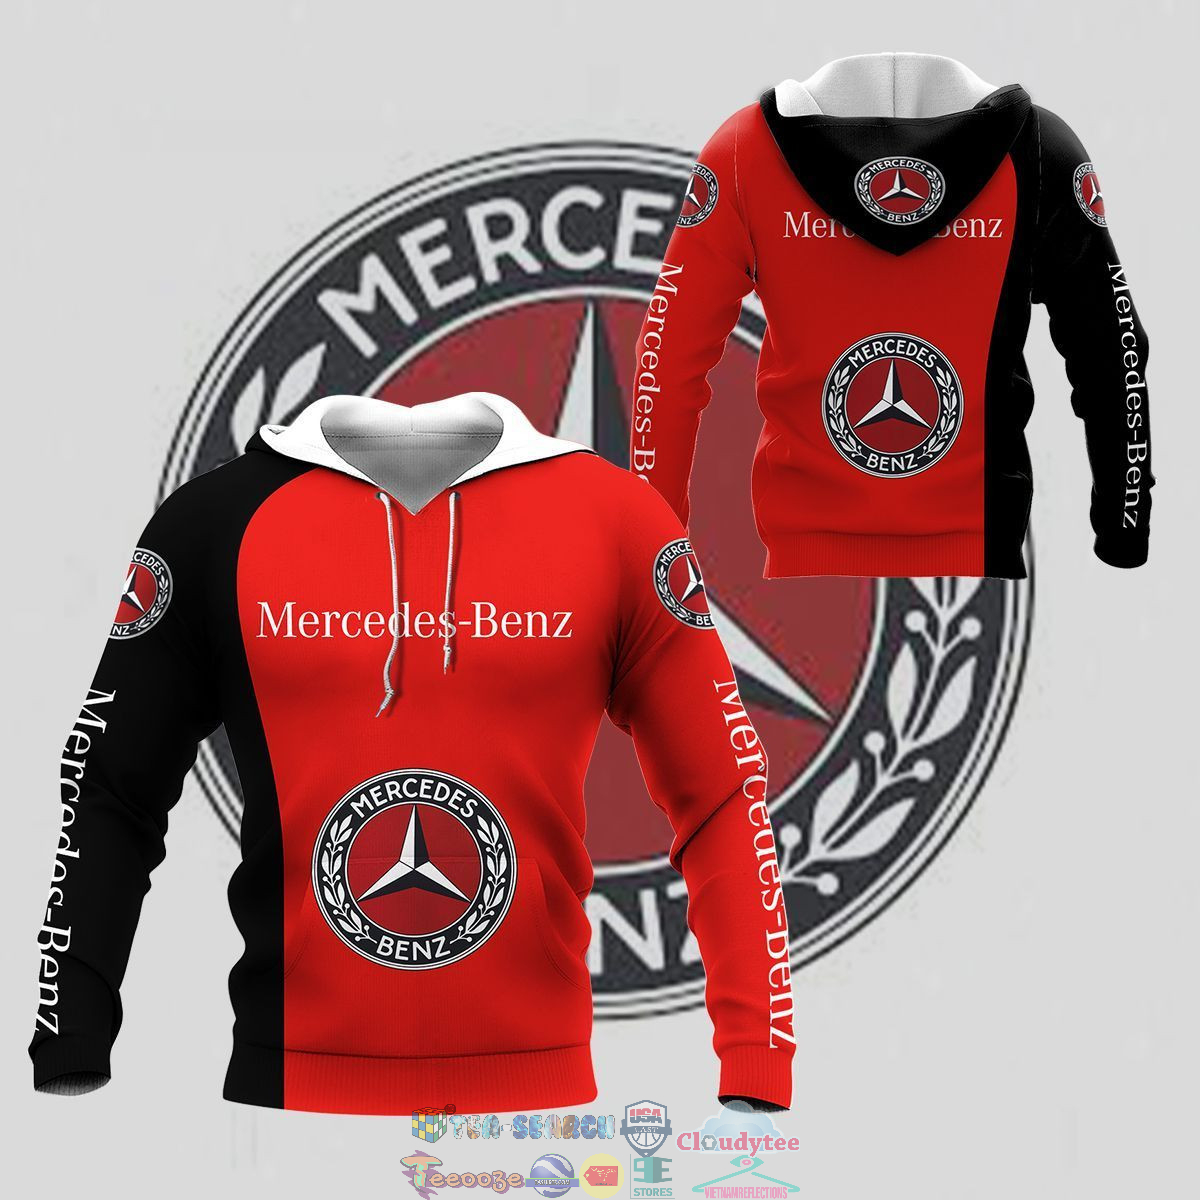 Mercedes-Benz ver 7 3D hoodie and t-shirt – Saleoff